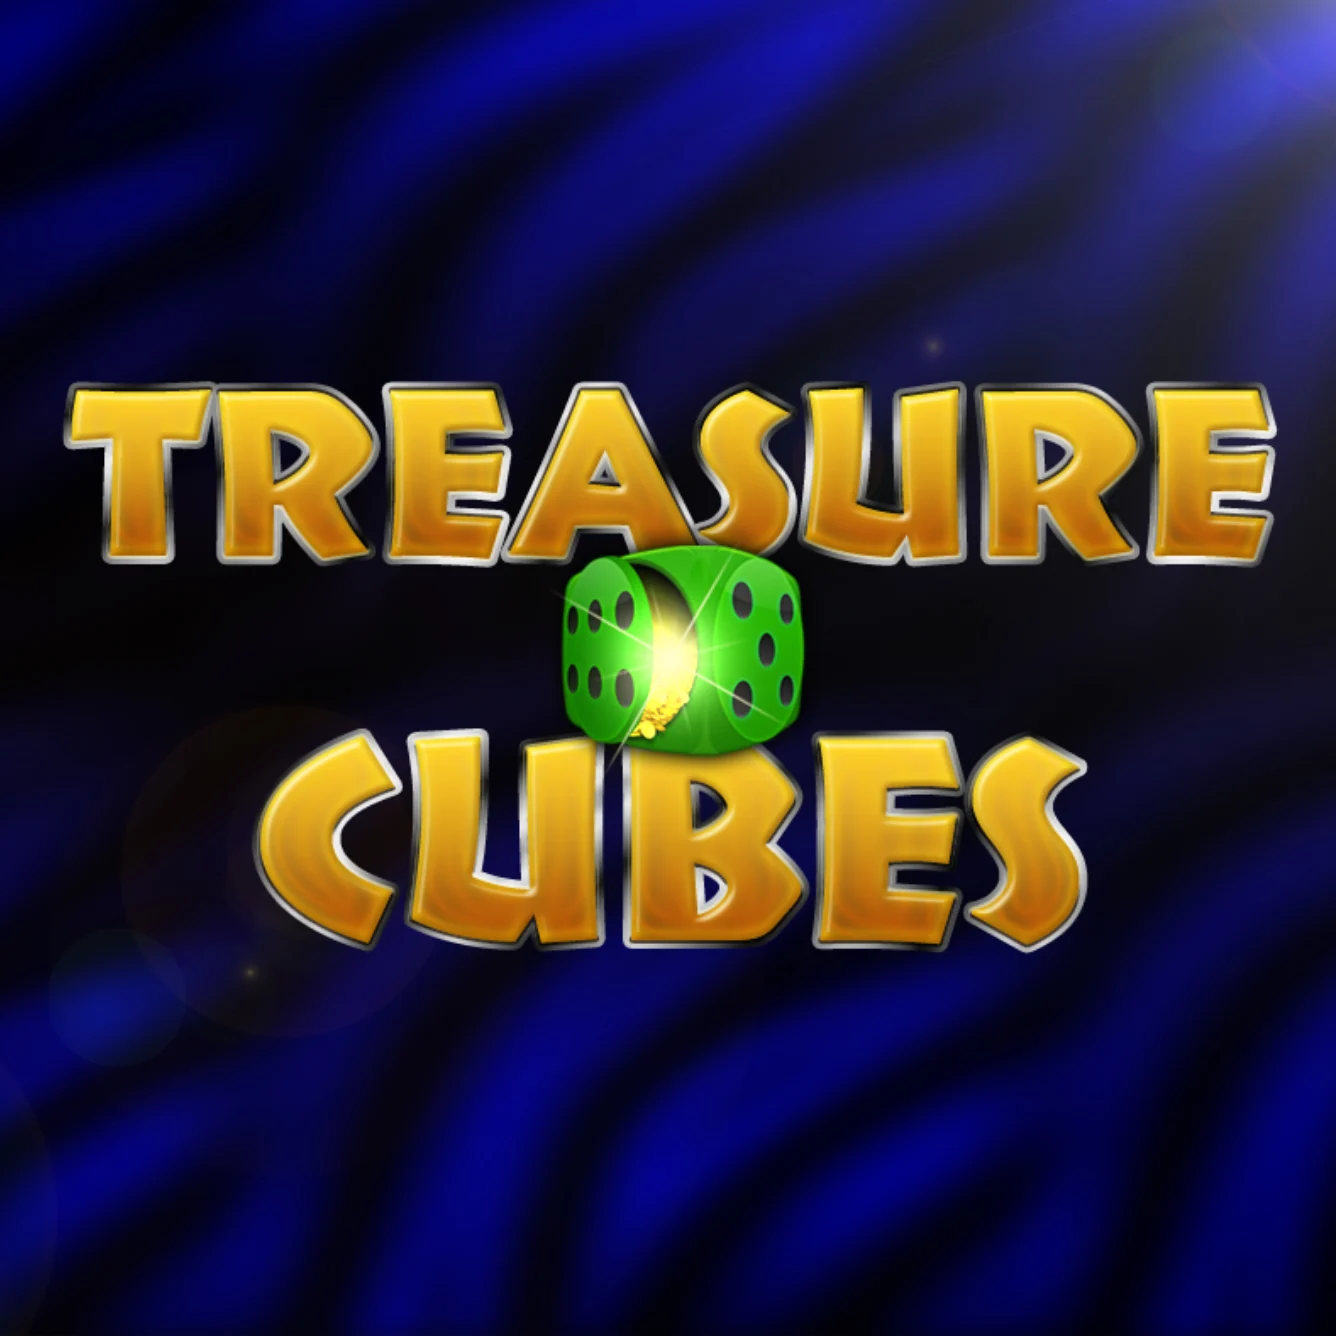 Play Treasure Cubes on Starcasinodice.be online casino